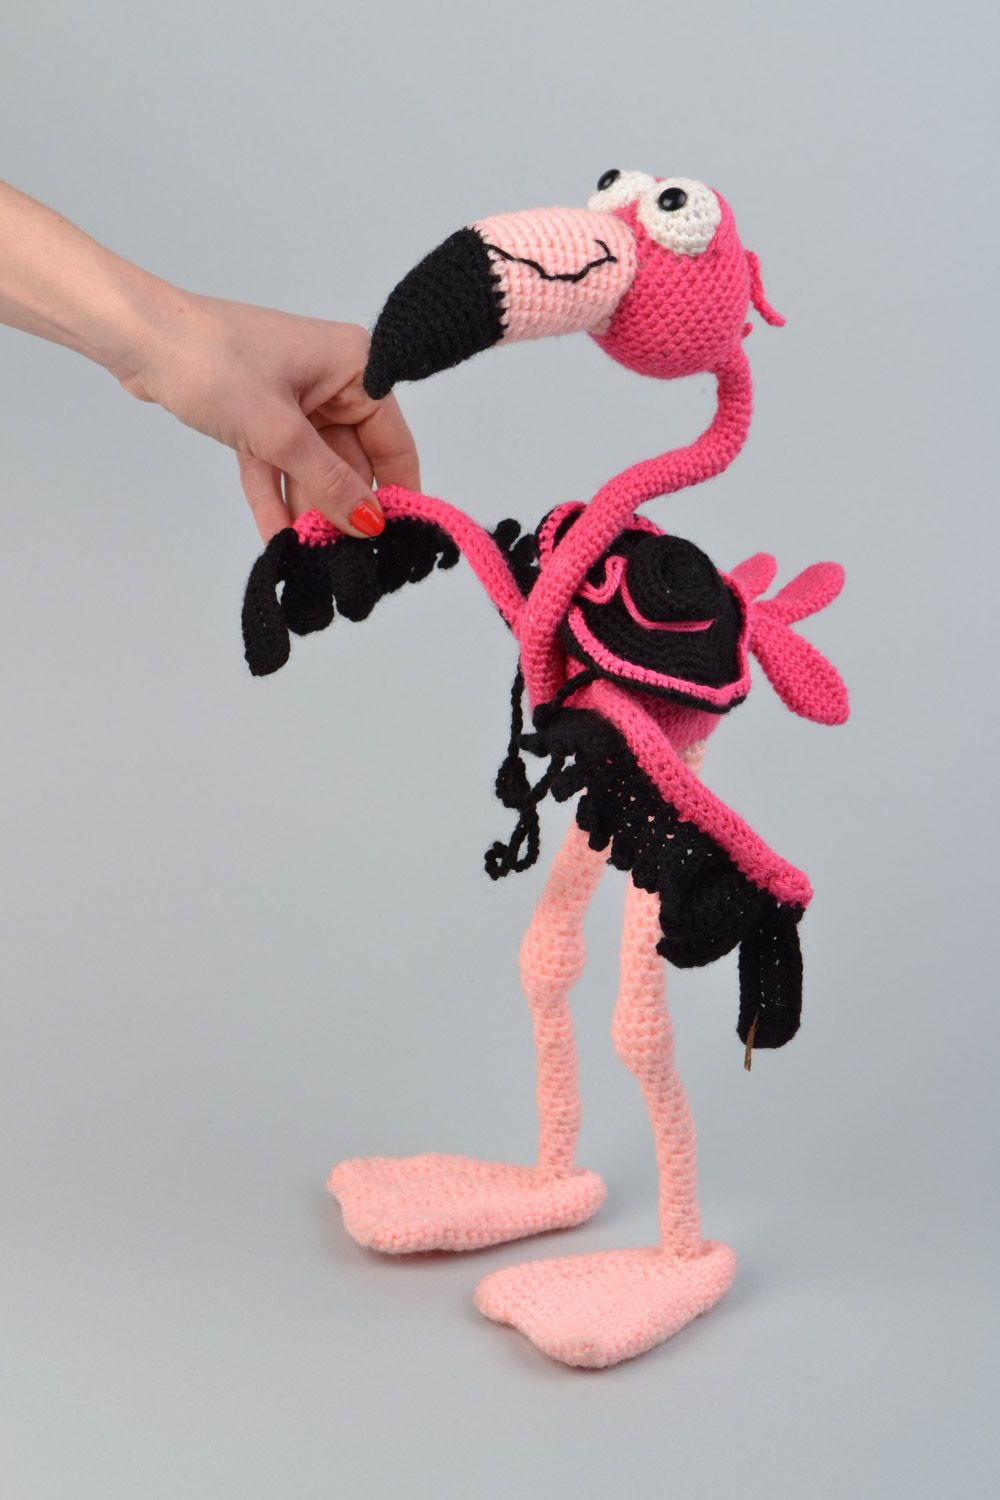 Handmade soft crochet toy pink flamingo on wire frame photo 1